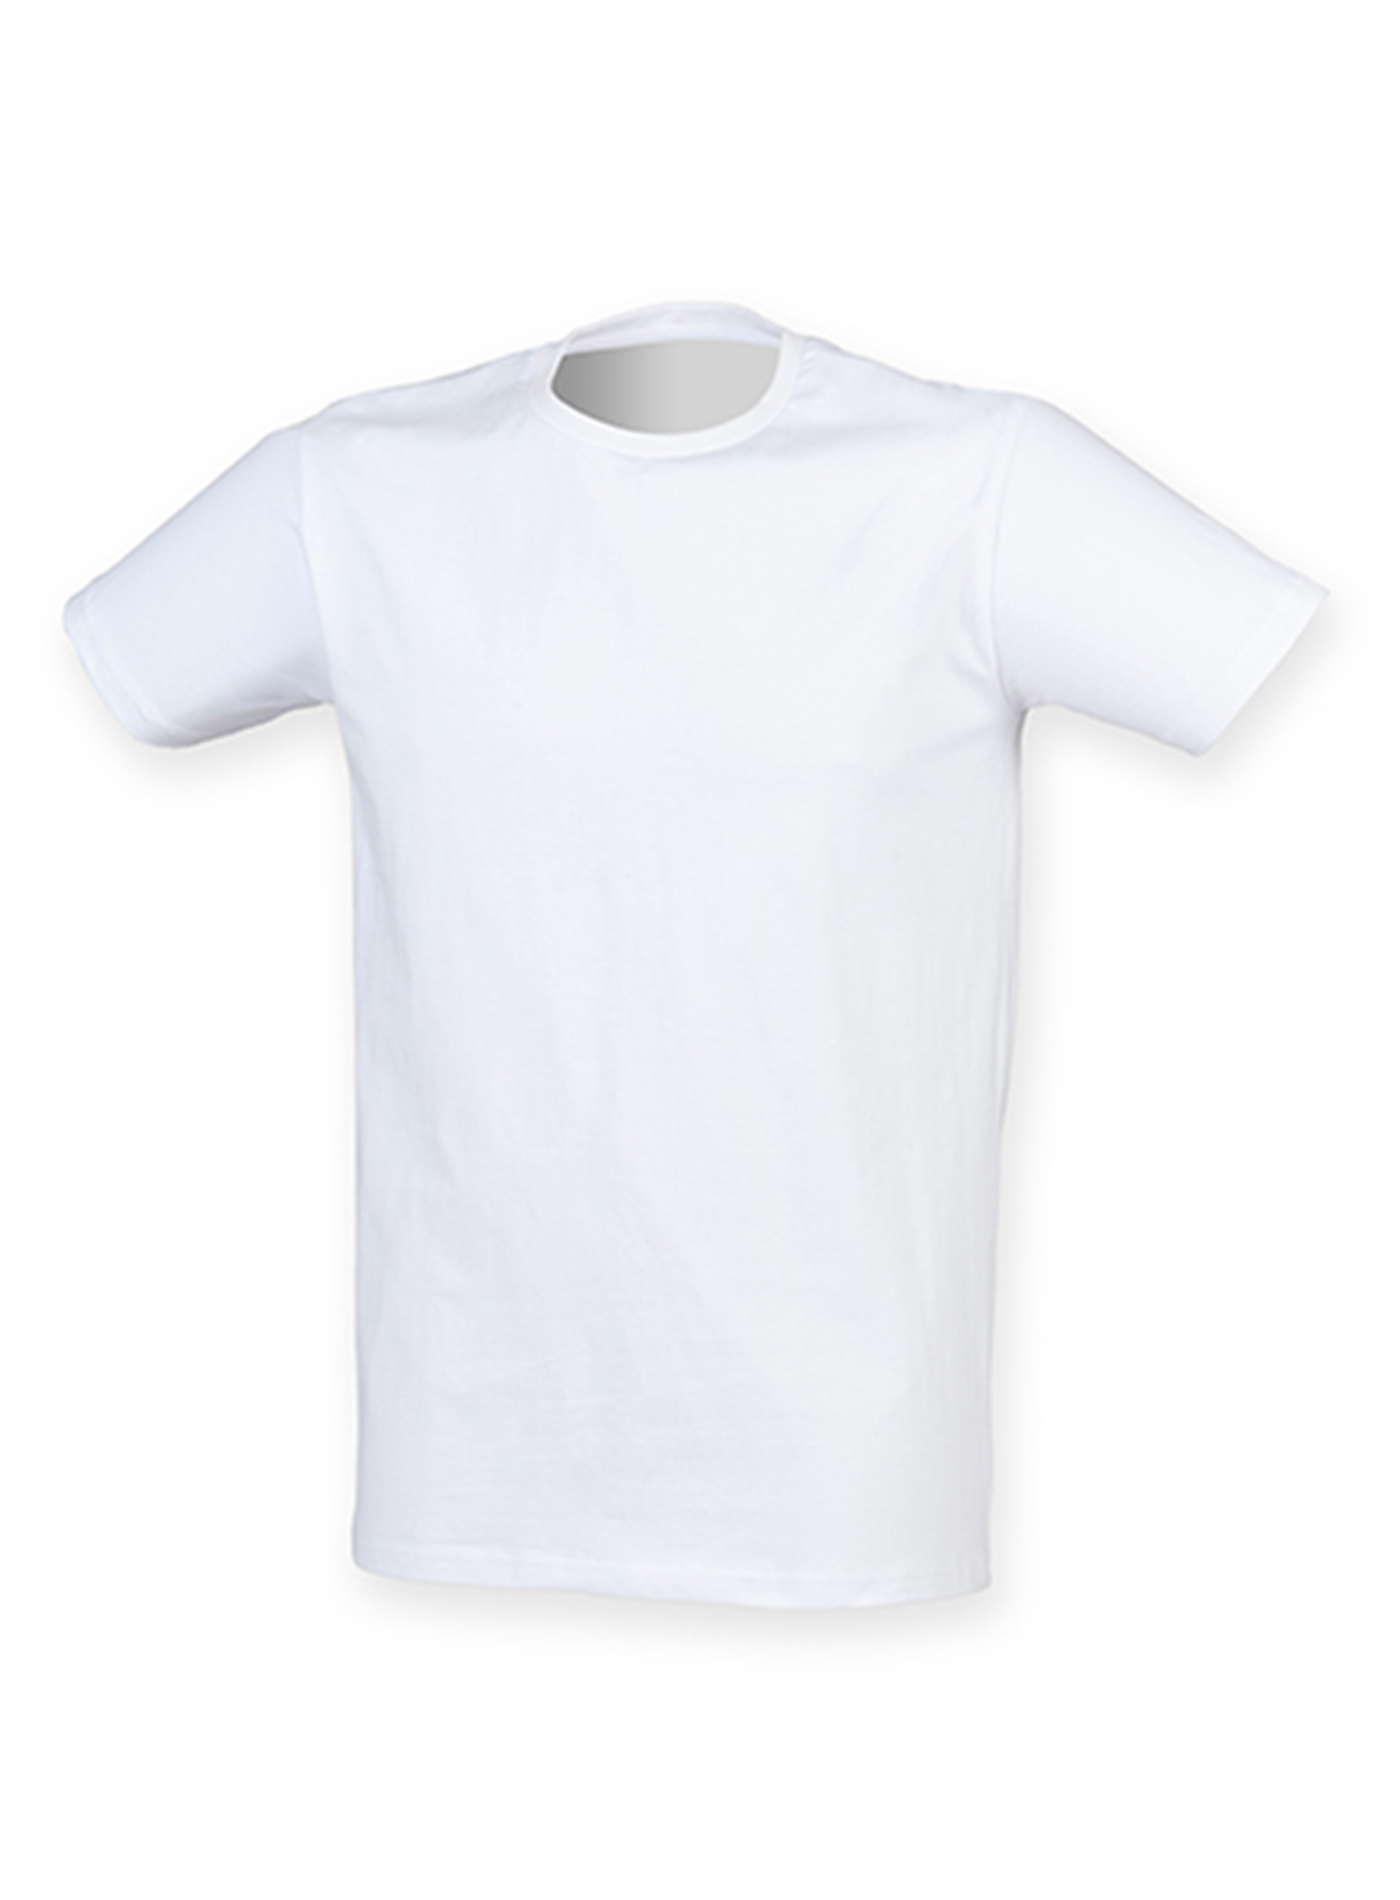 Pánské strečové tričko Skinnifit Feels good - Bílá XL